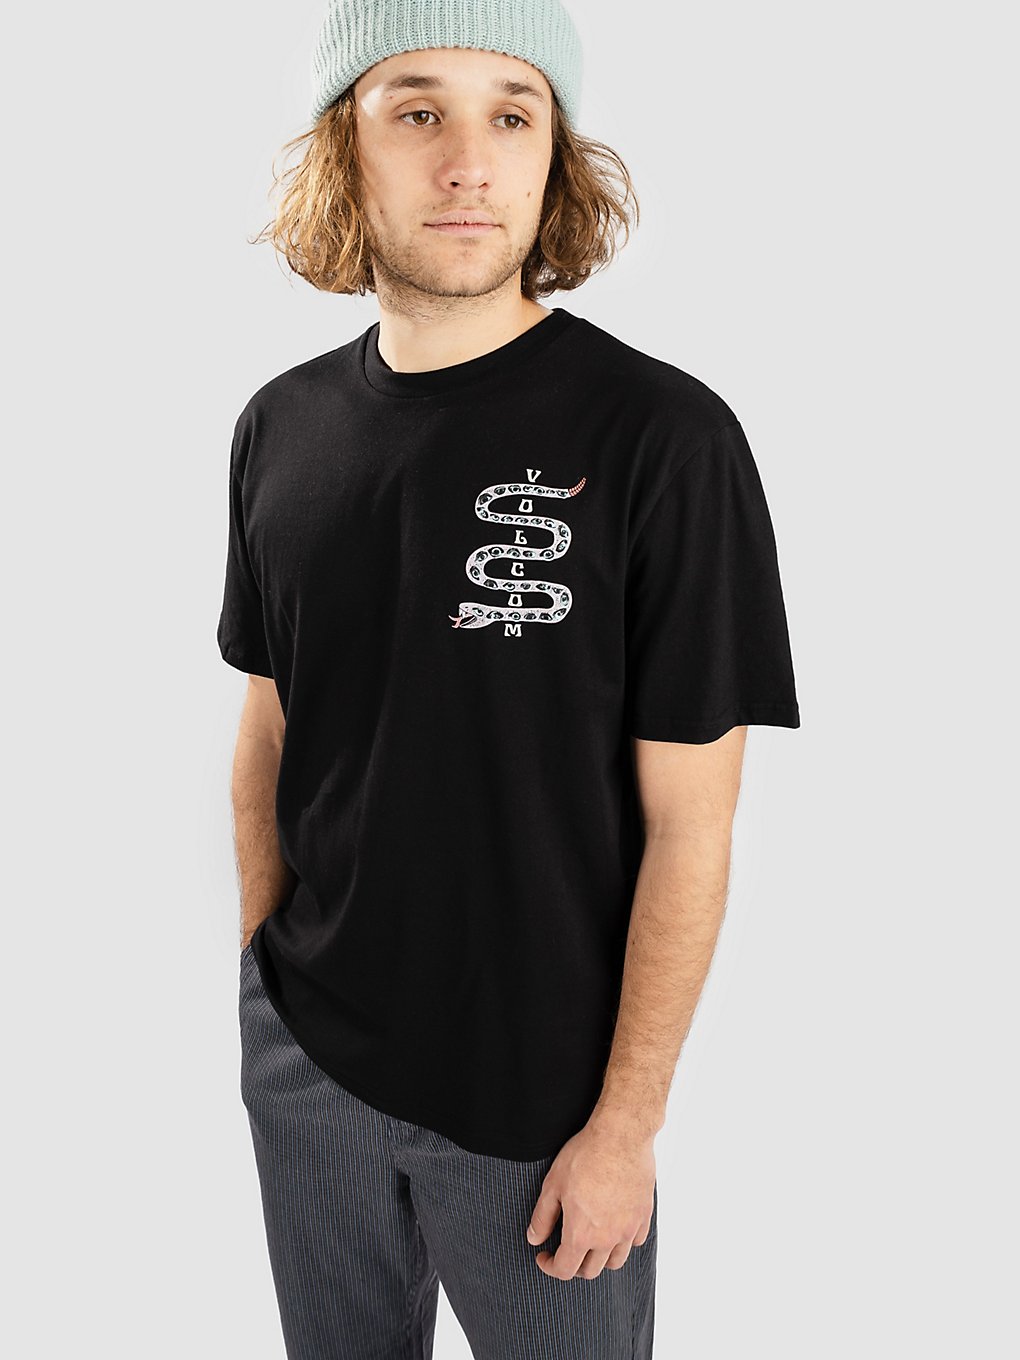 Volcom Foretoken T-Shirt black kaufen